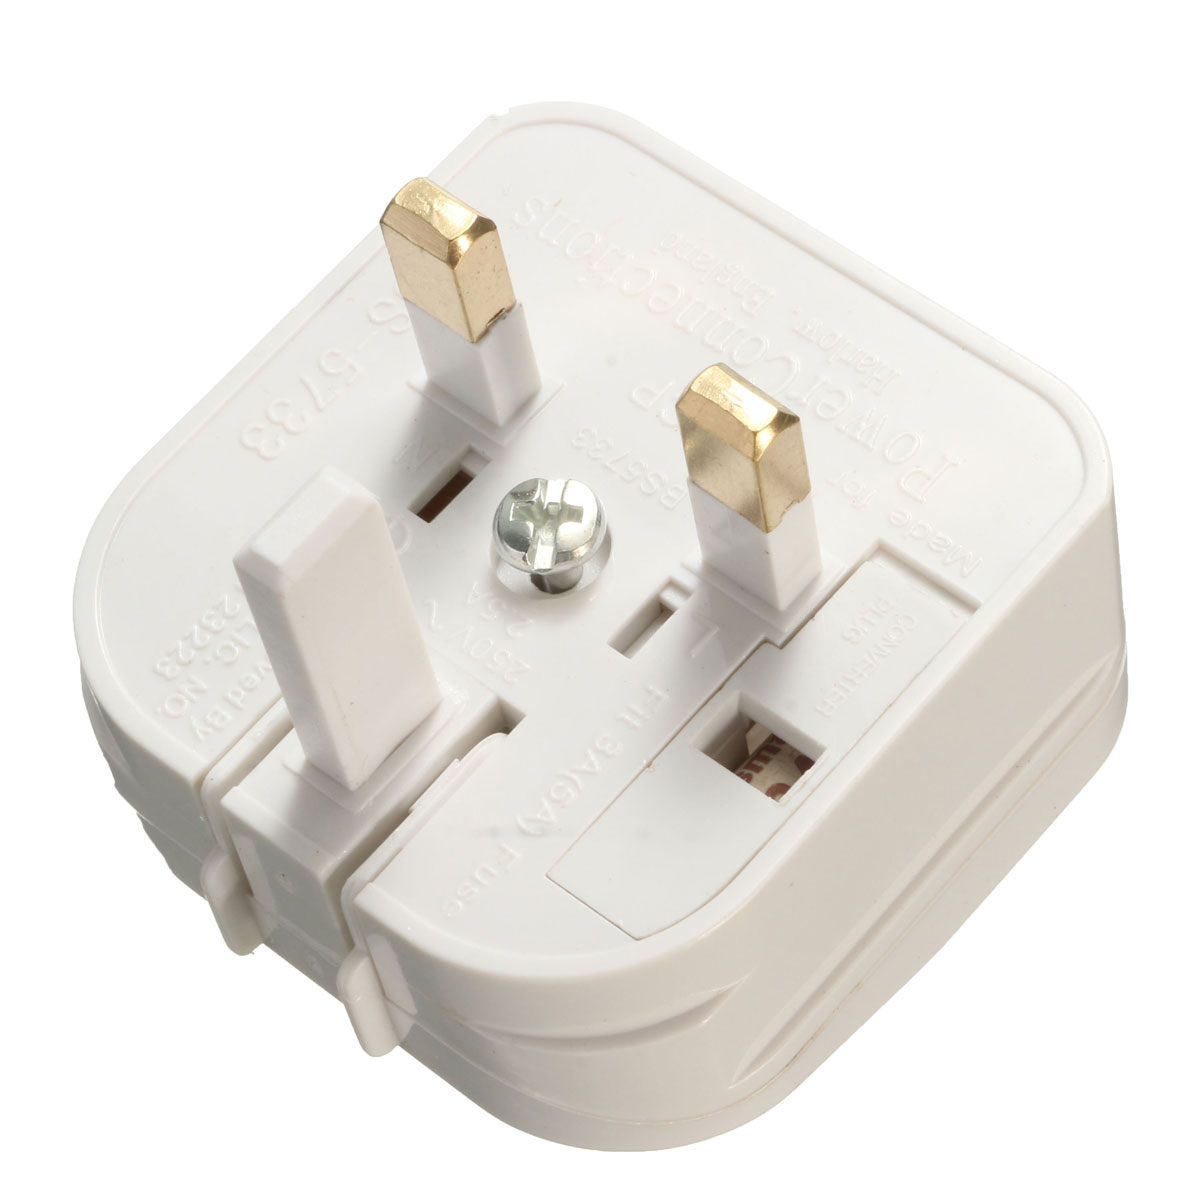 UK-Converter-Adaptor-Plug-Travel-Power-Connections-White-1054517